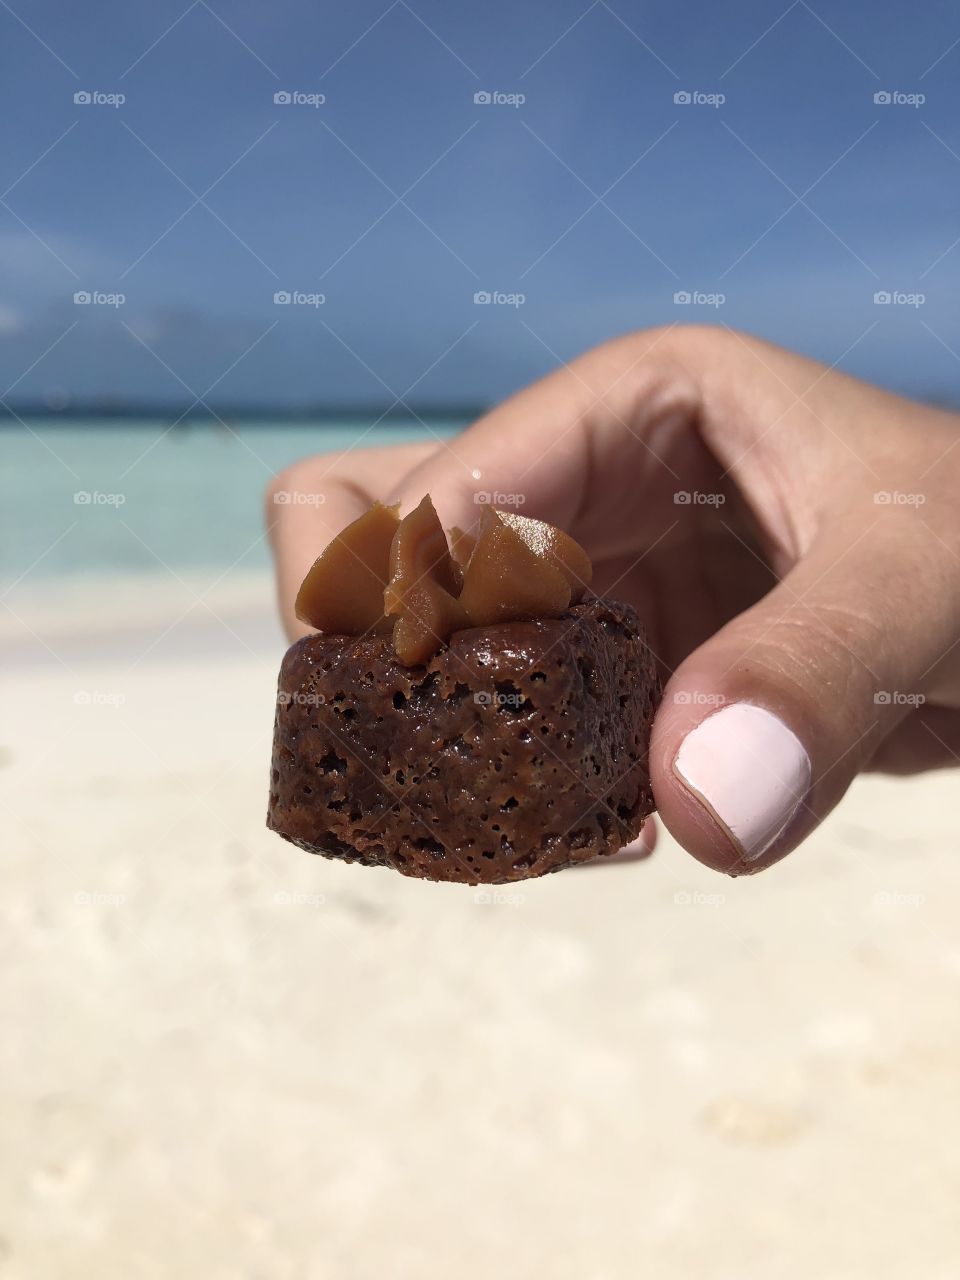 Tasty brownie by the beach